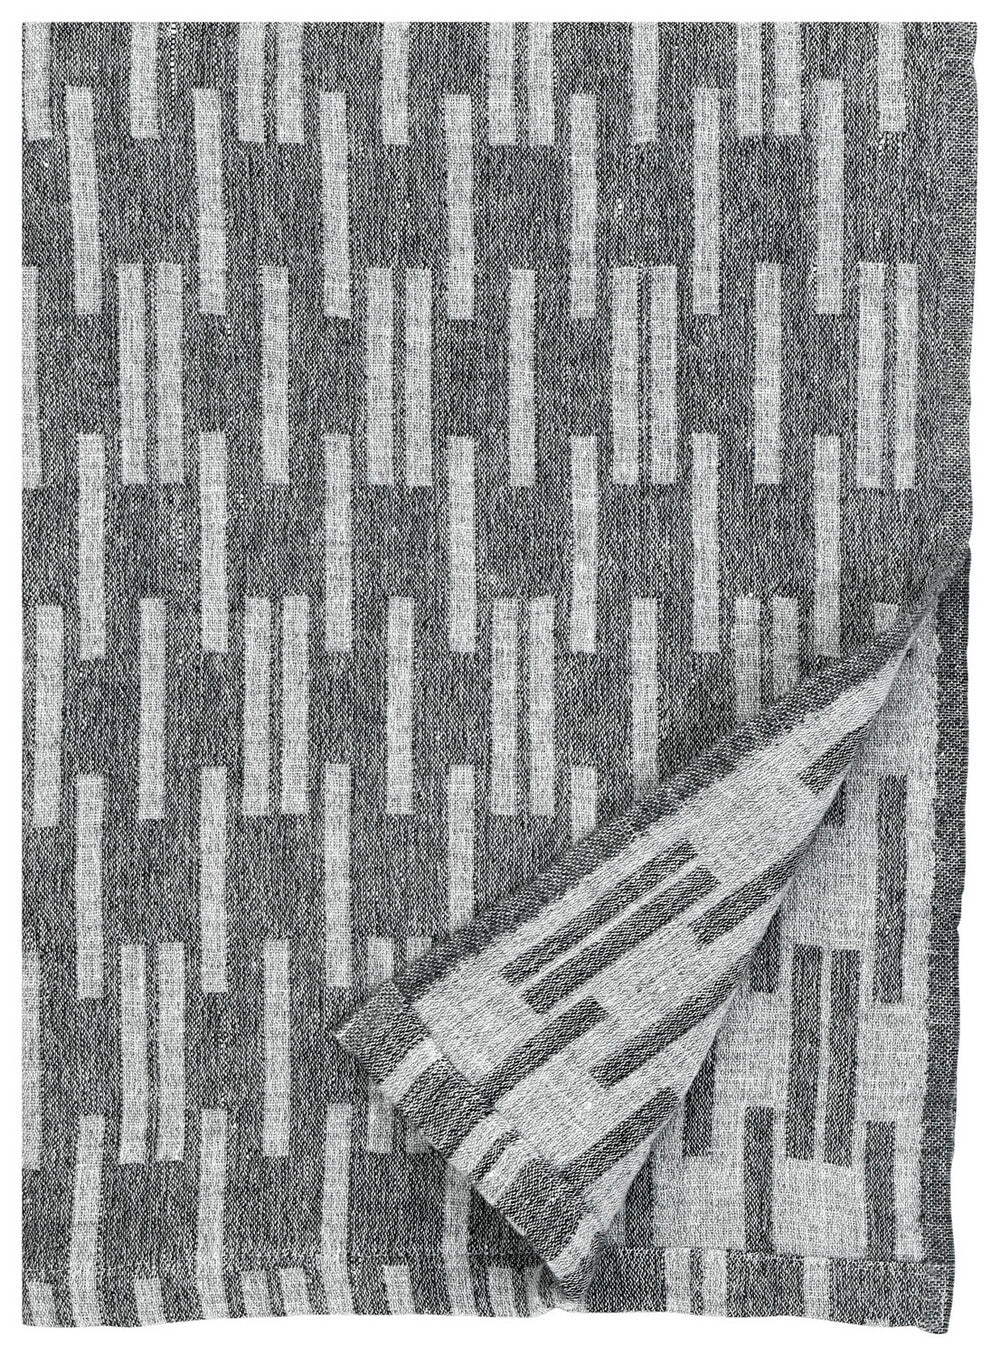 ARKI blanket 130x180cm 9/dark grey-light grey linen-merino *